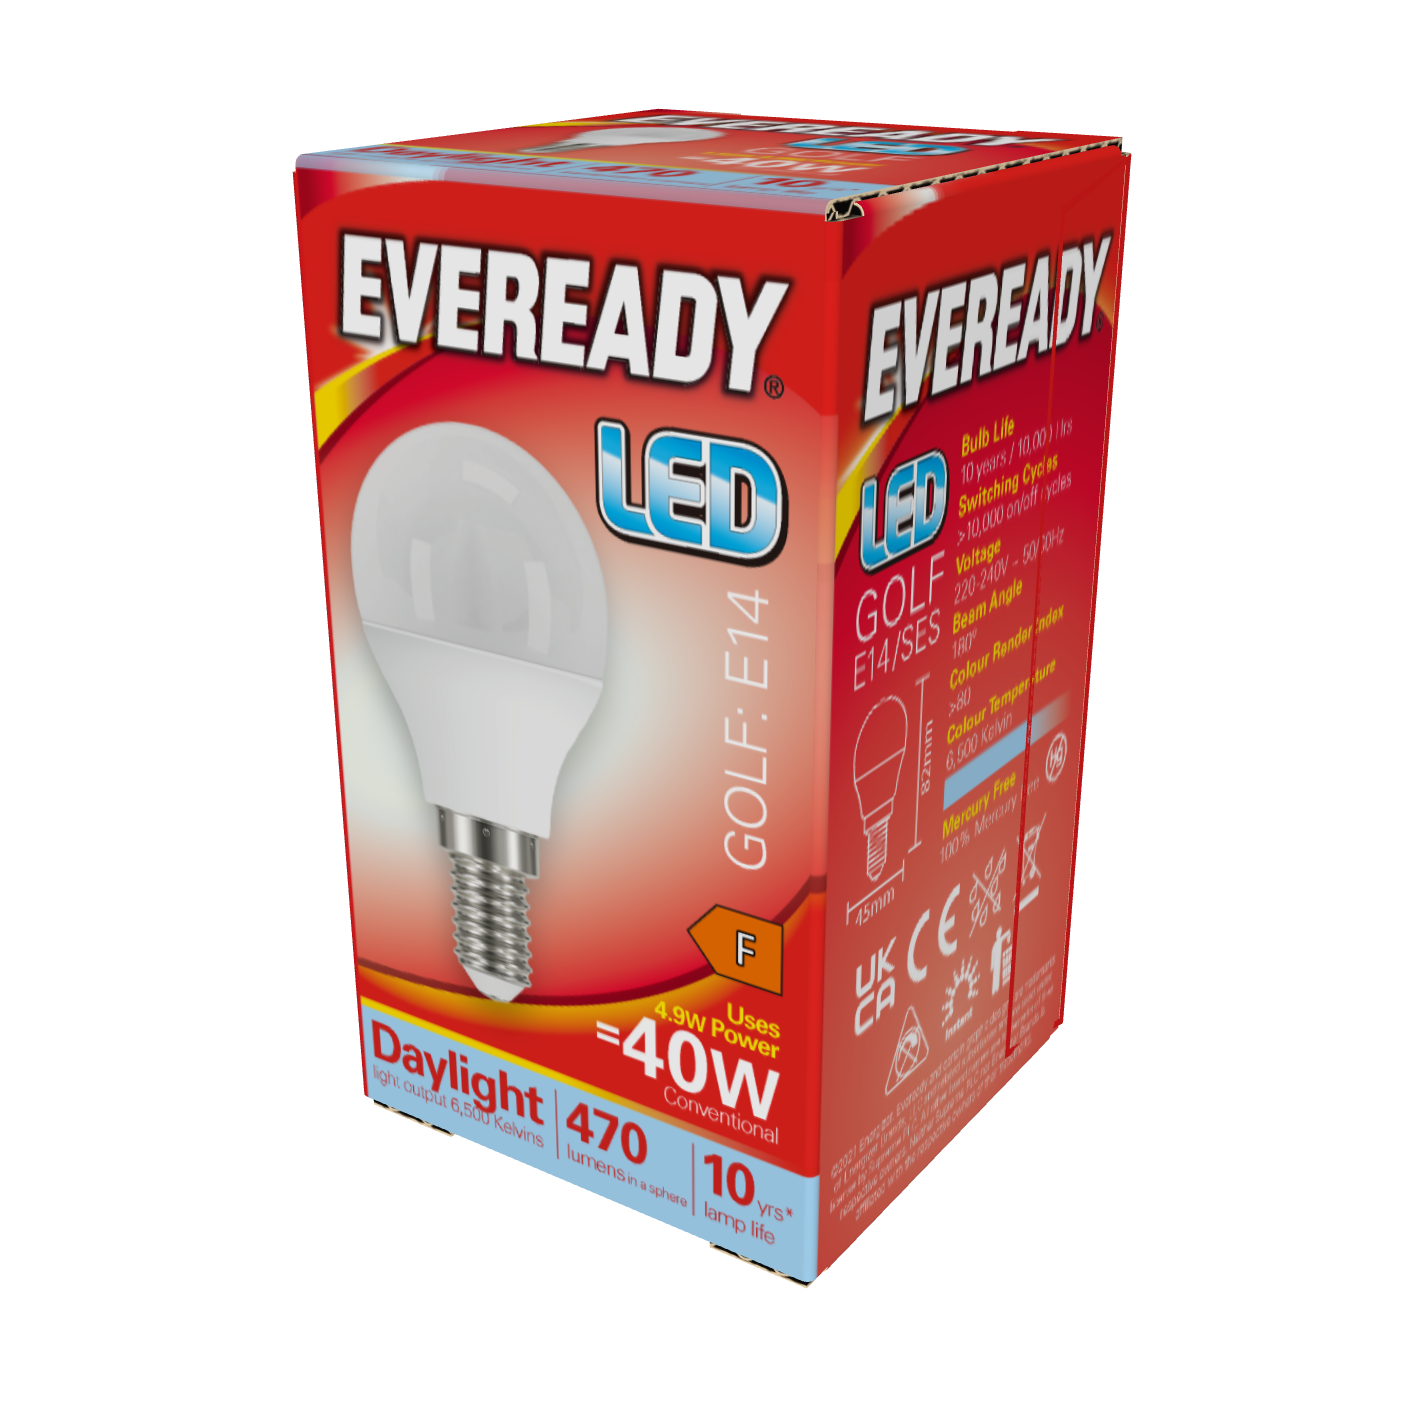 Eveready LED Golf E14 (SES) 470lm 4.9W 6,500K (Daylight), Box of 1